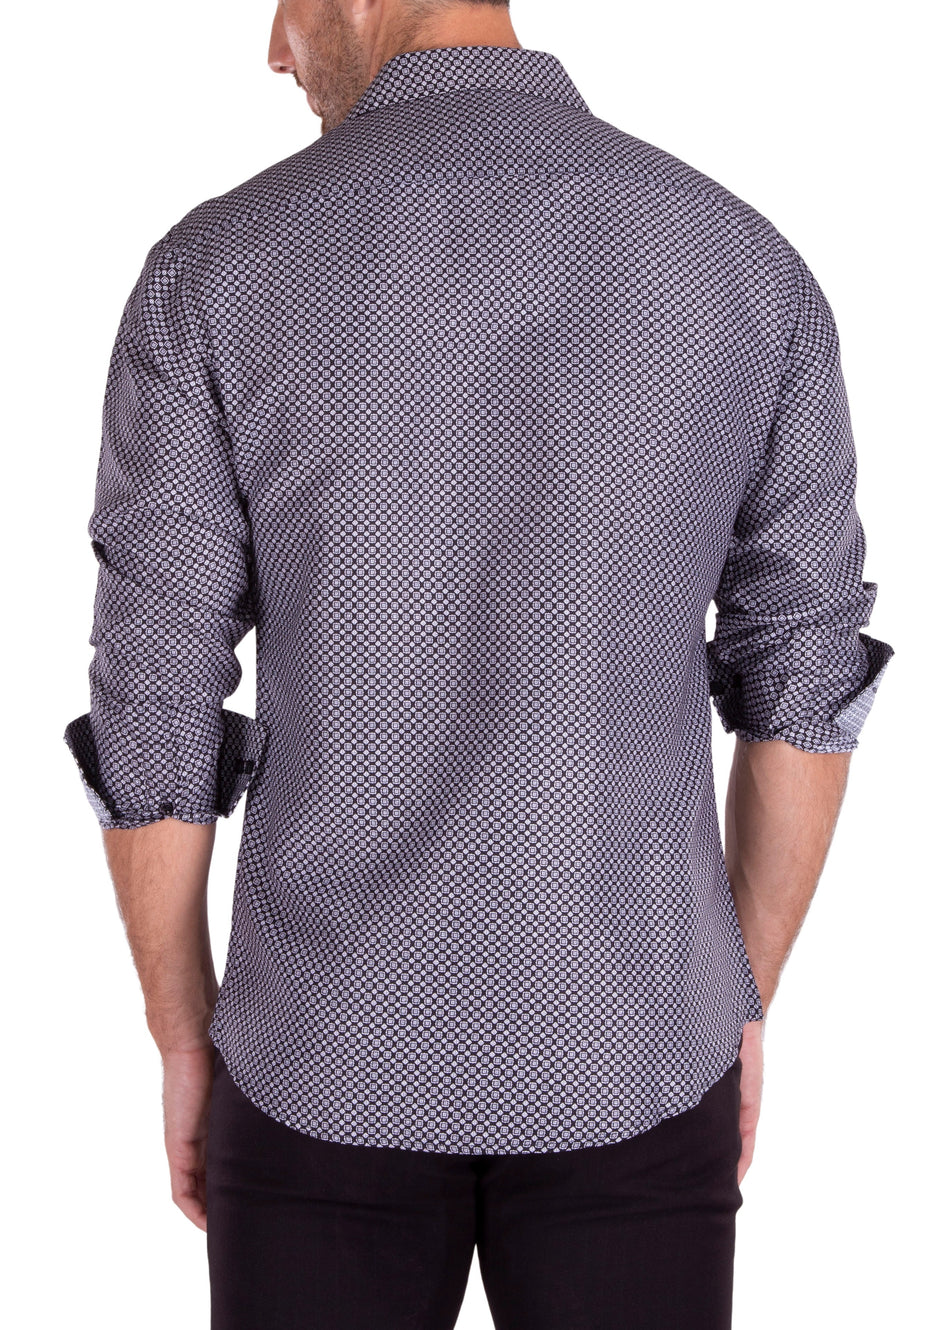 212388 - Black Long Sleeve Shirt